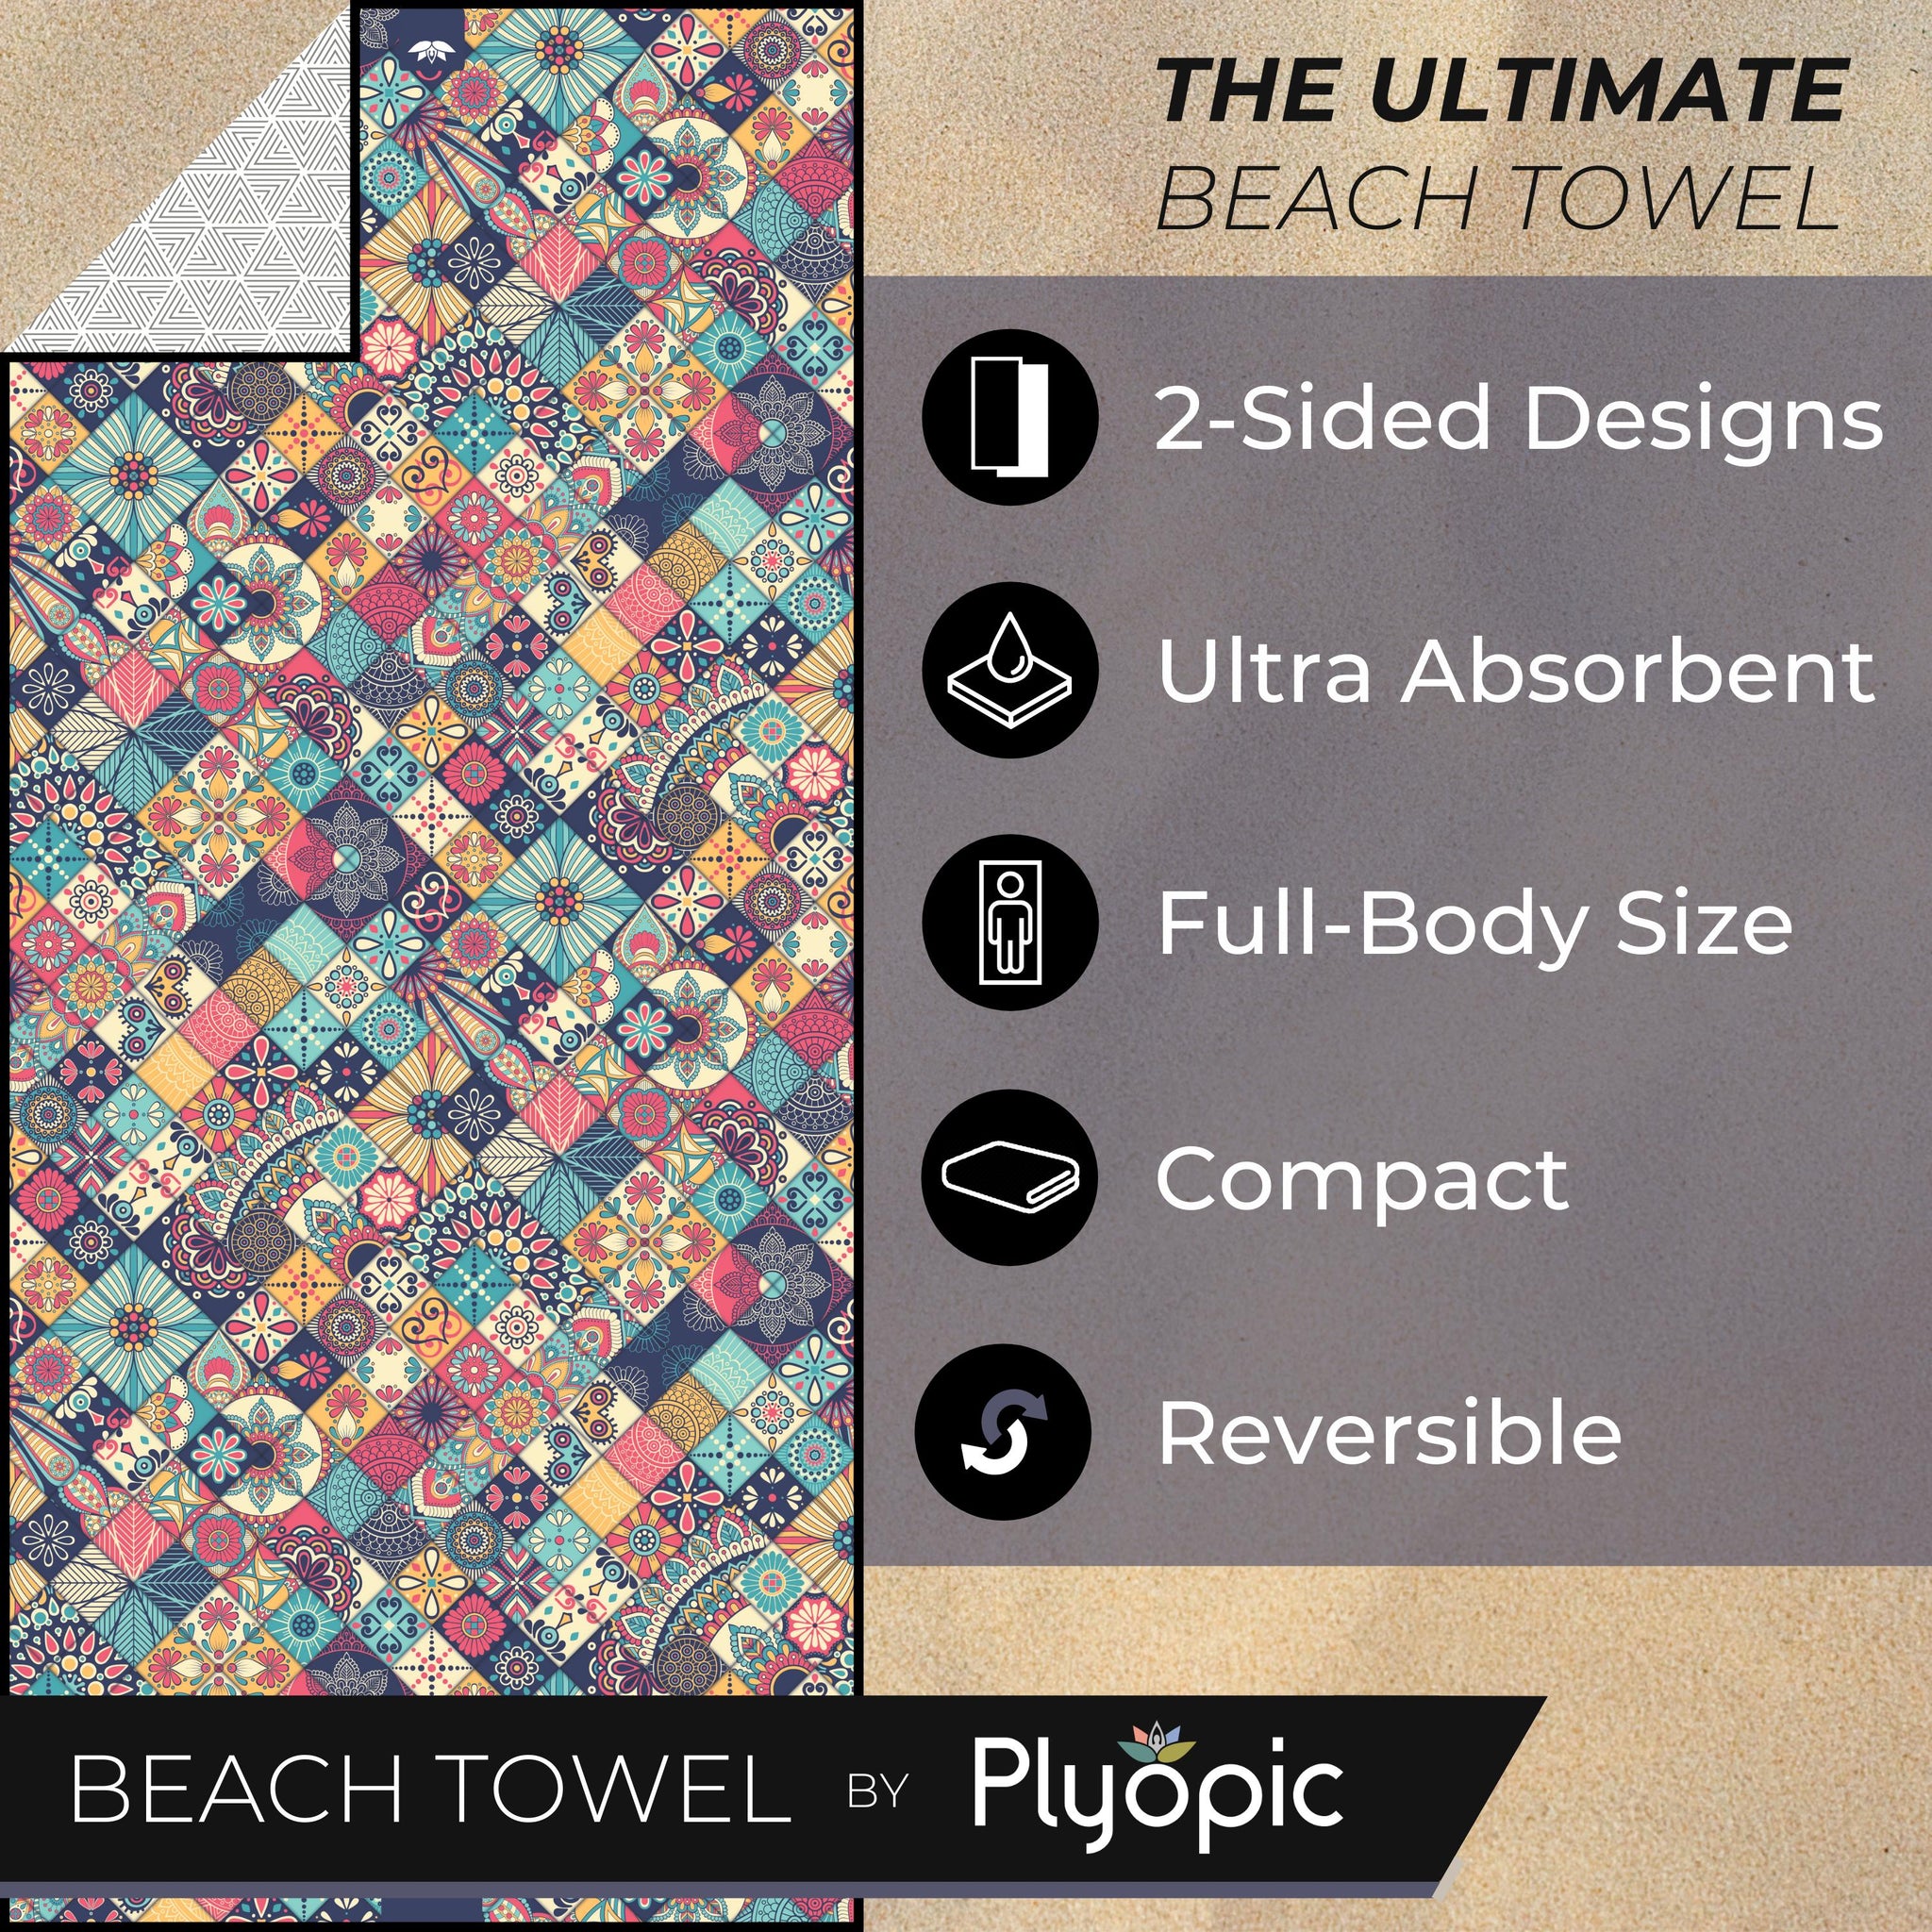 Plyopic Microfiber Beach Towel - Bohemian